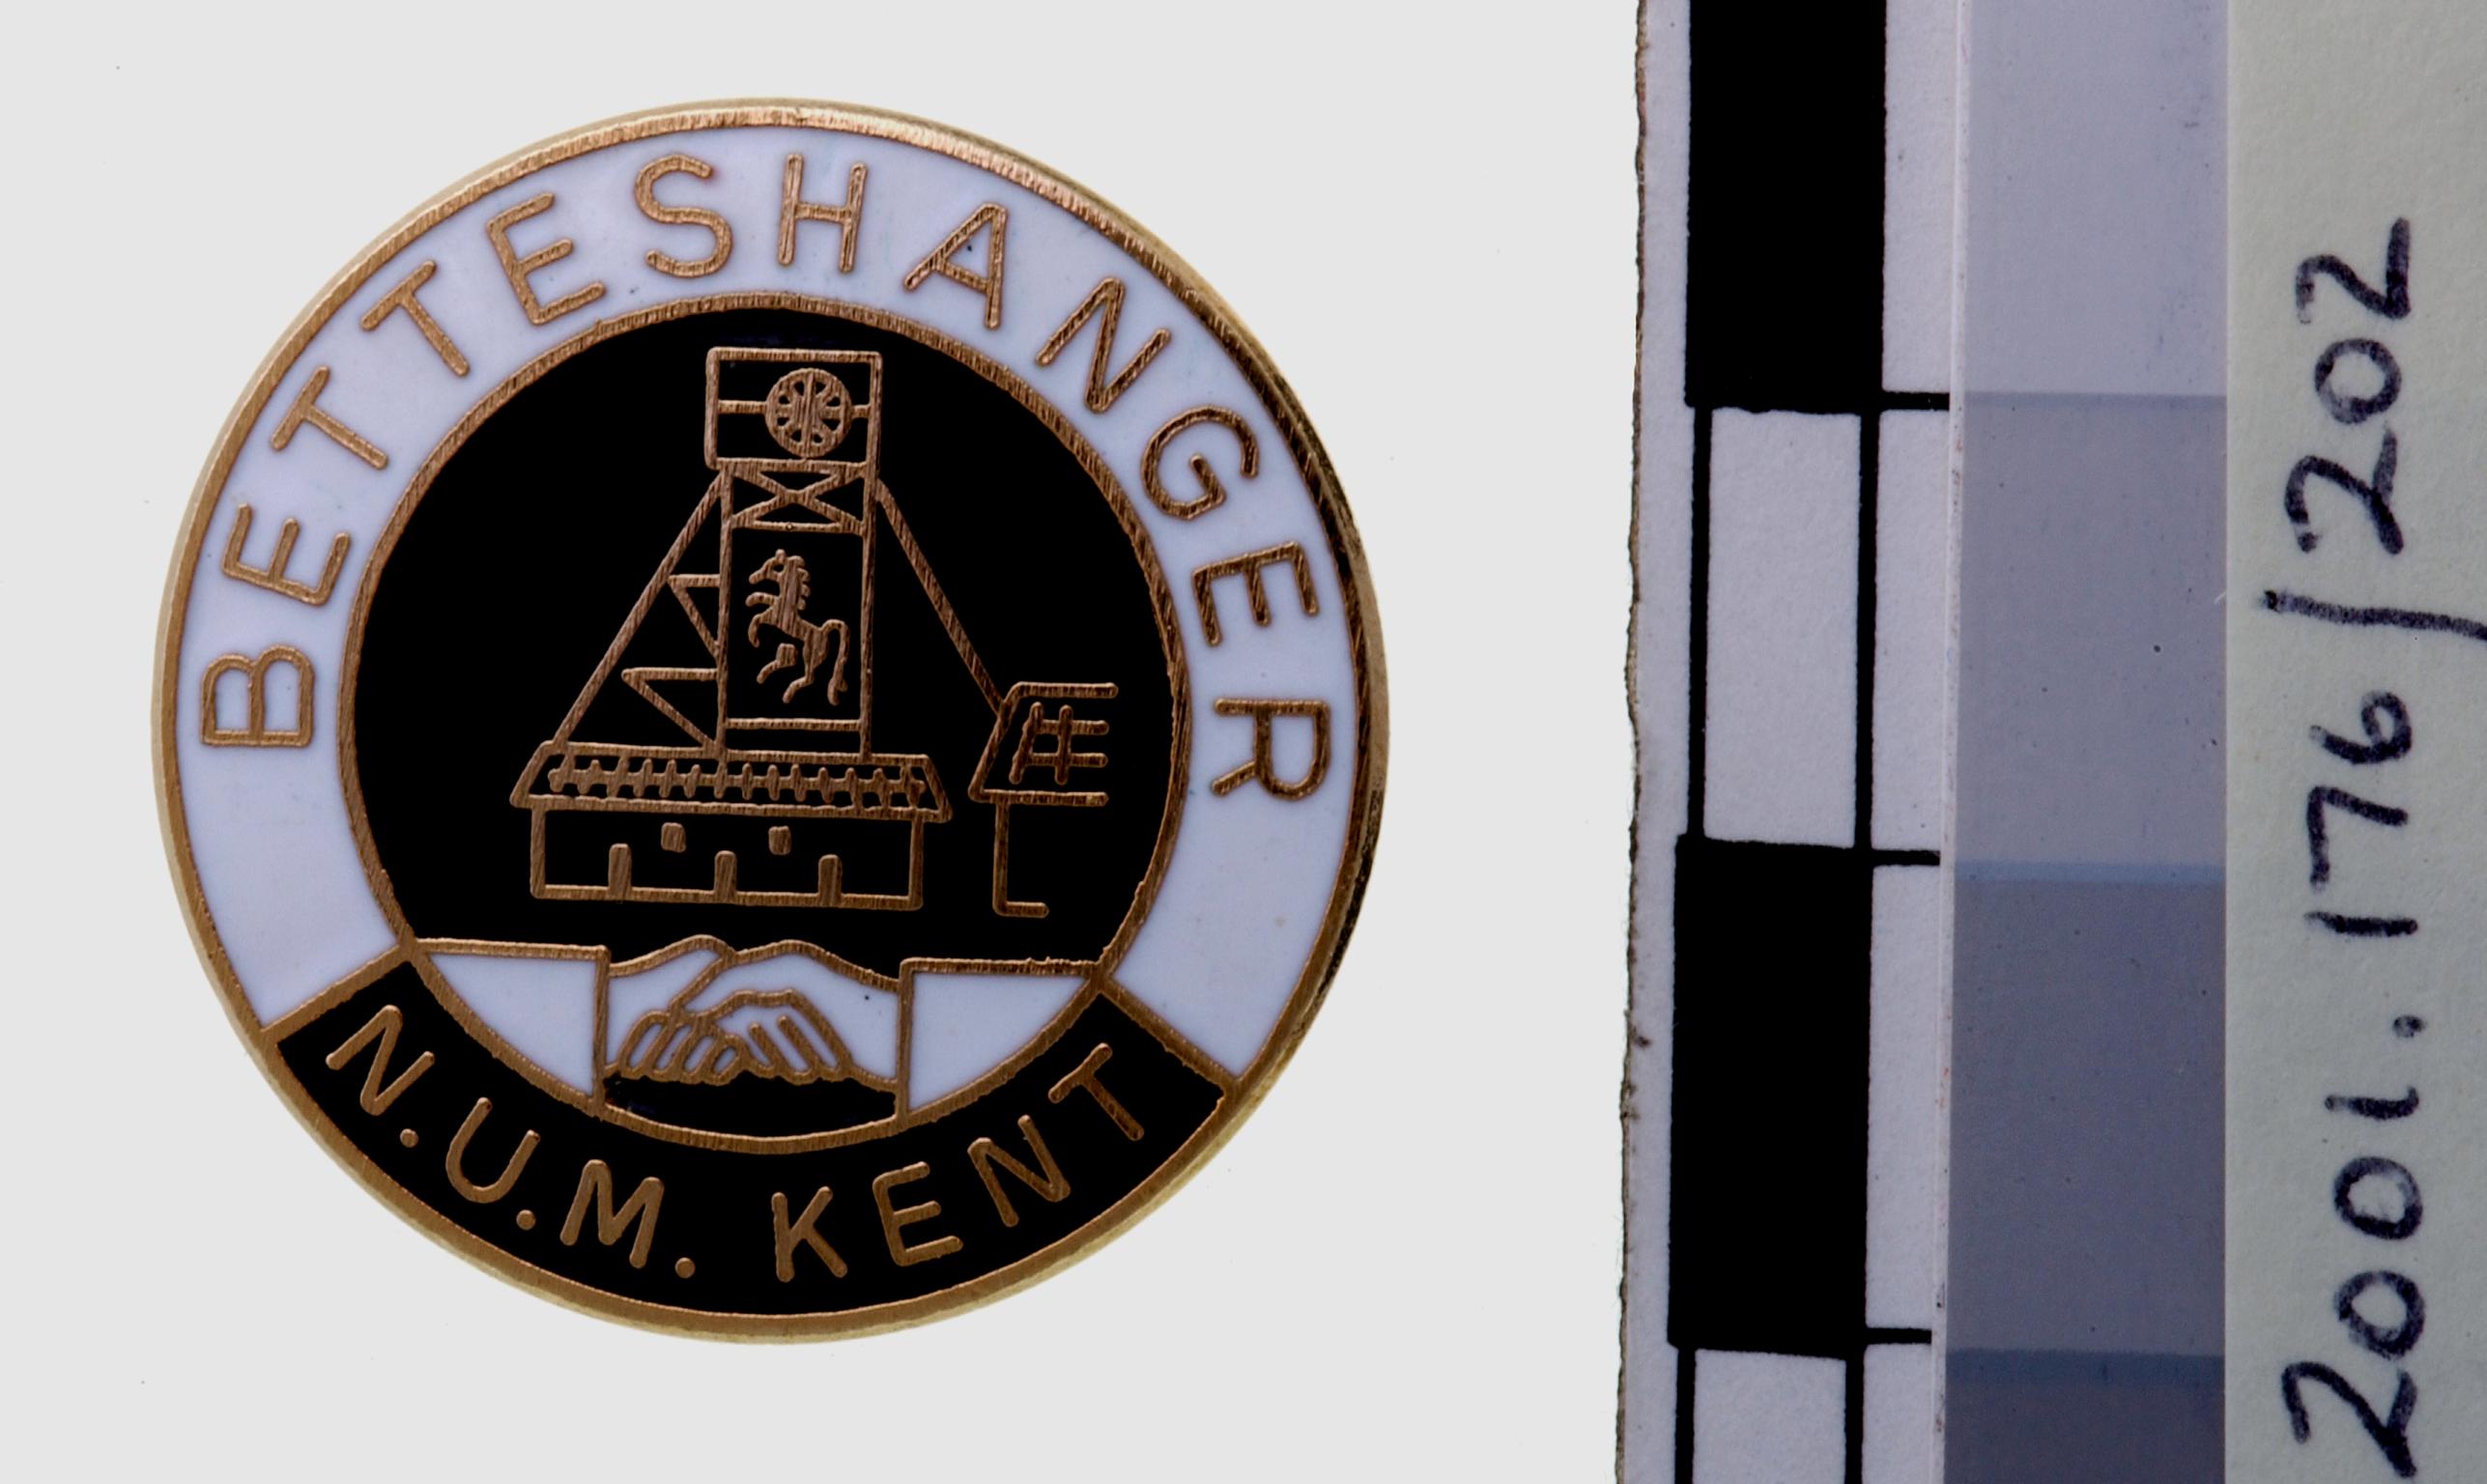 N.U.M. Kent Area, badge